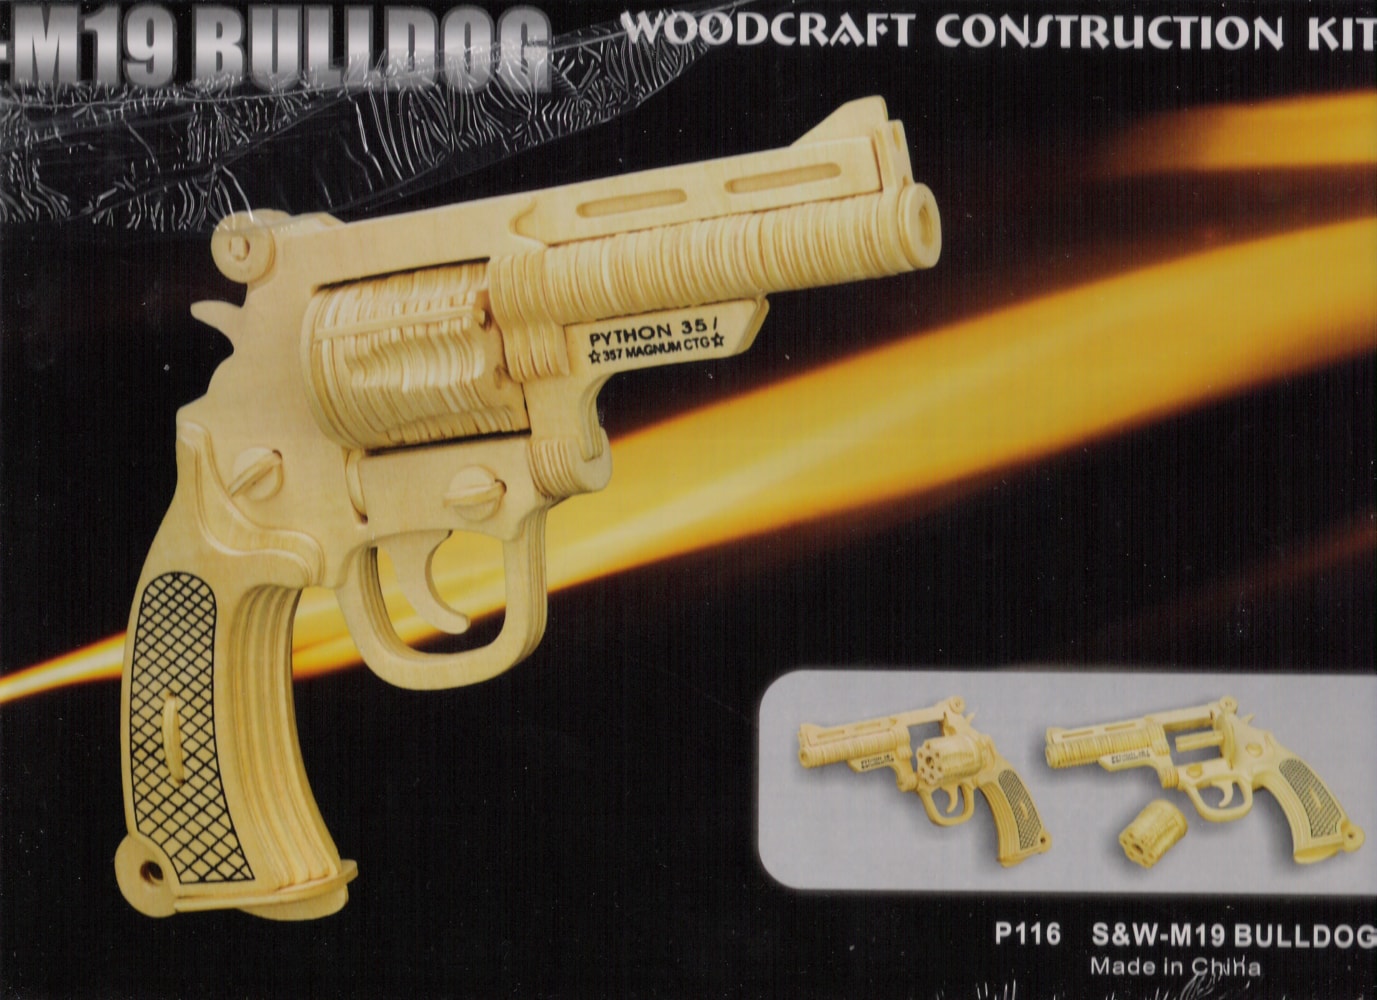 Pistola Bulldog M19 cortada a laser com montagem